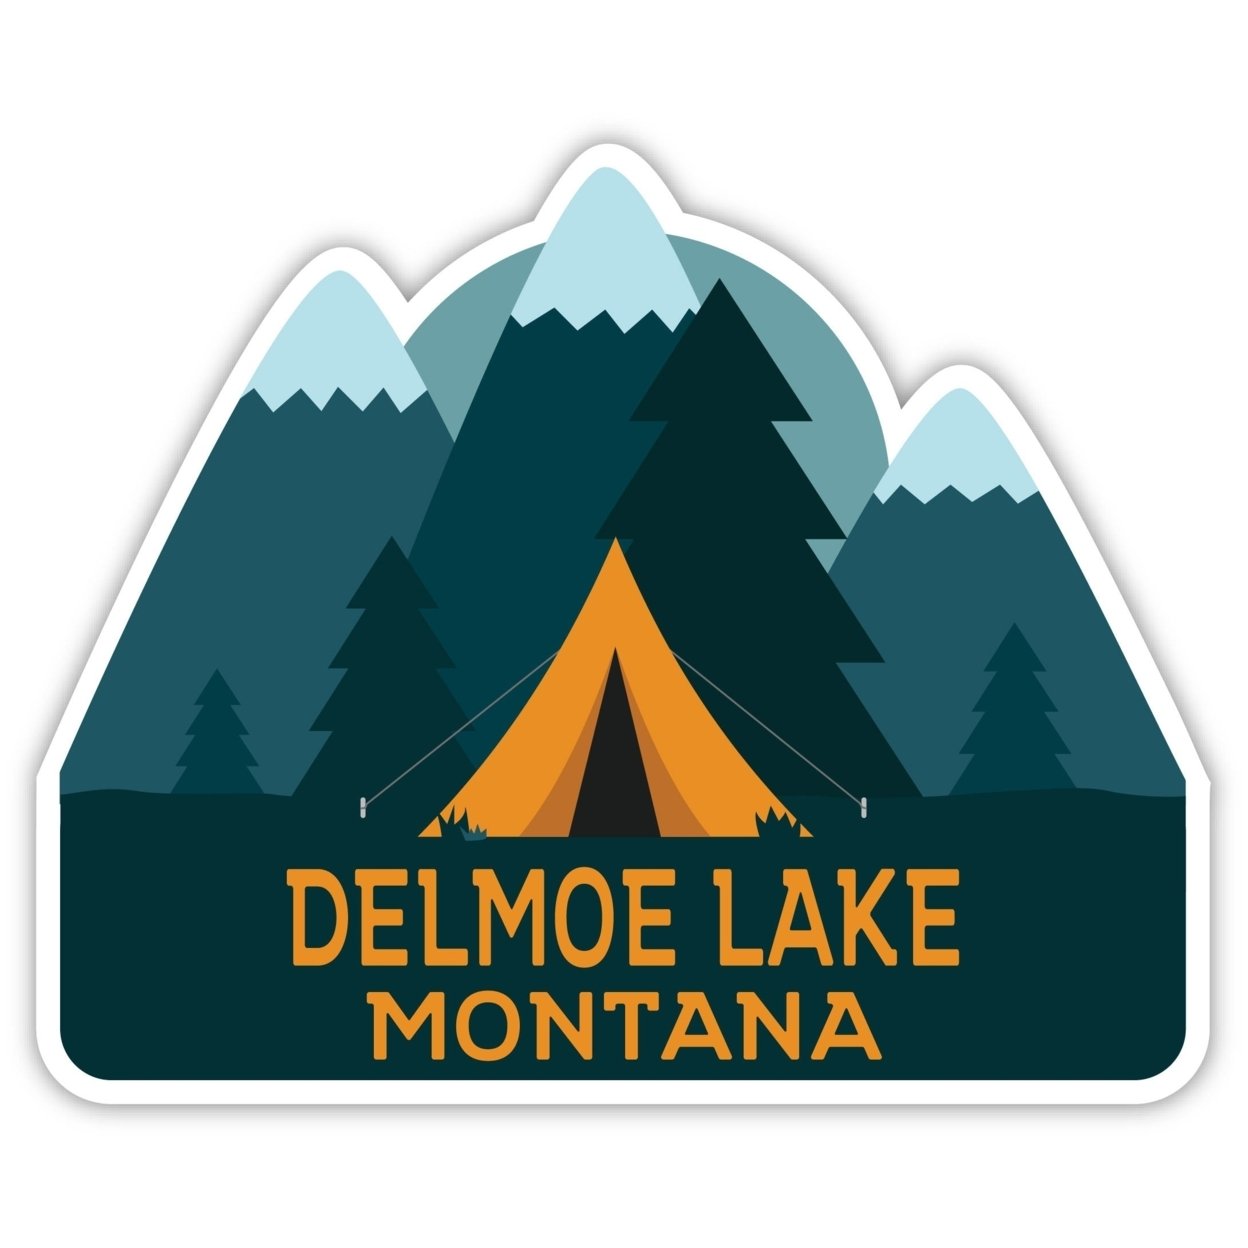 Delmoe Lake Montana Souvenir Decorative Stickers (Choose Theme And Size) - 4-Pack, 4-Inch, Tent